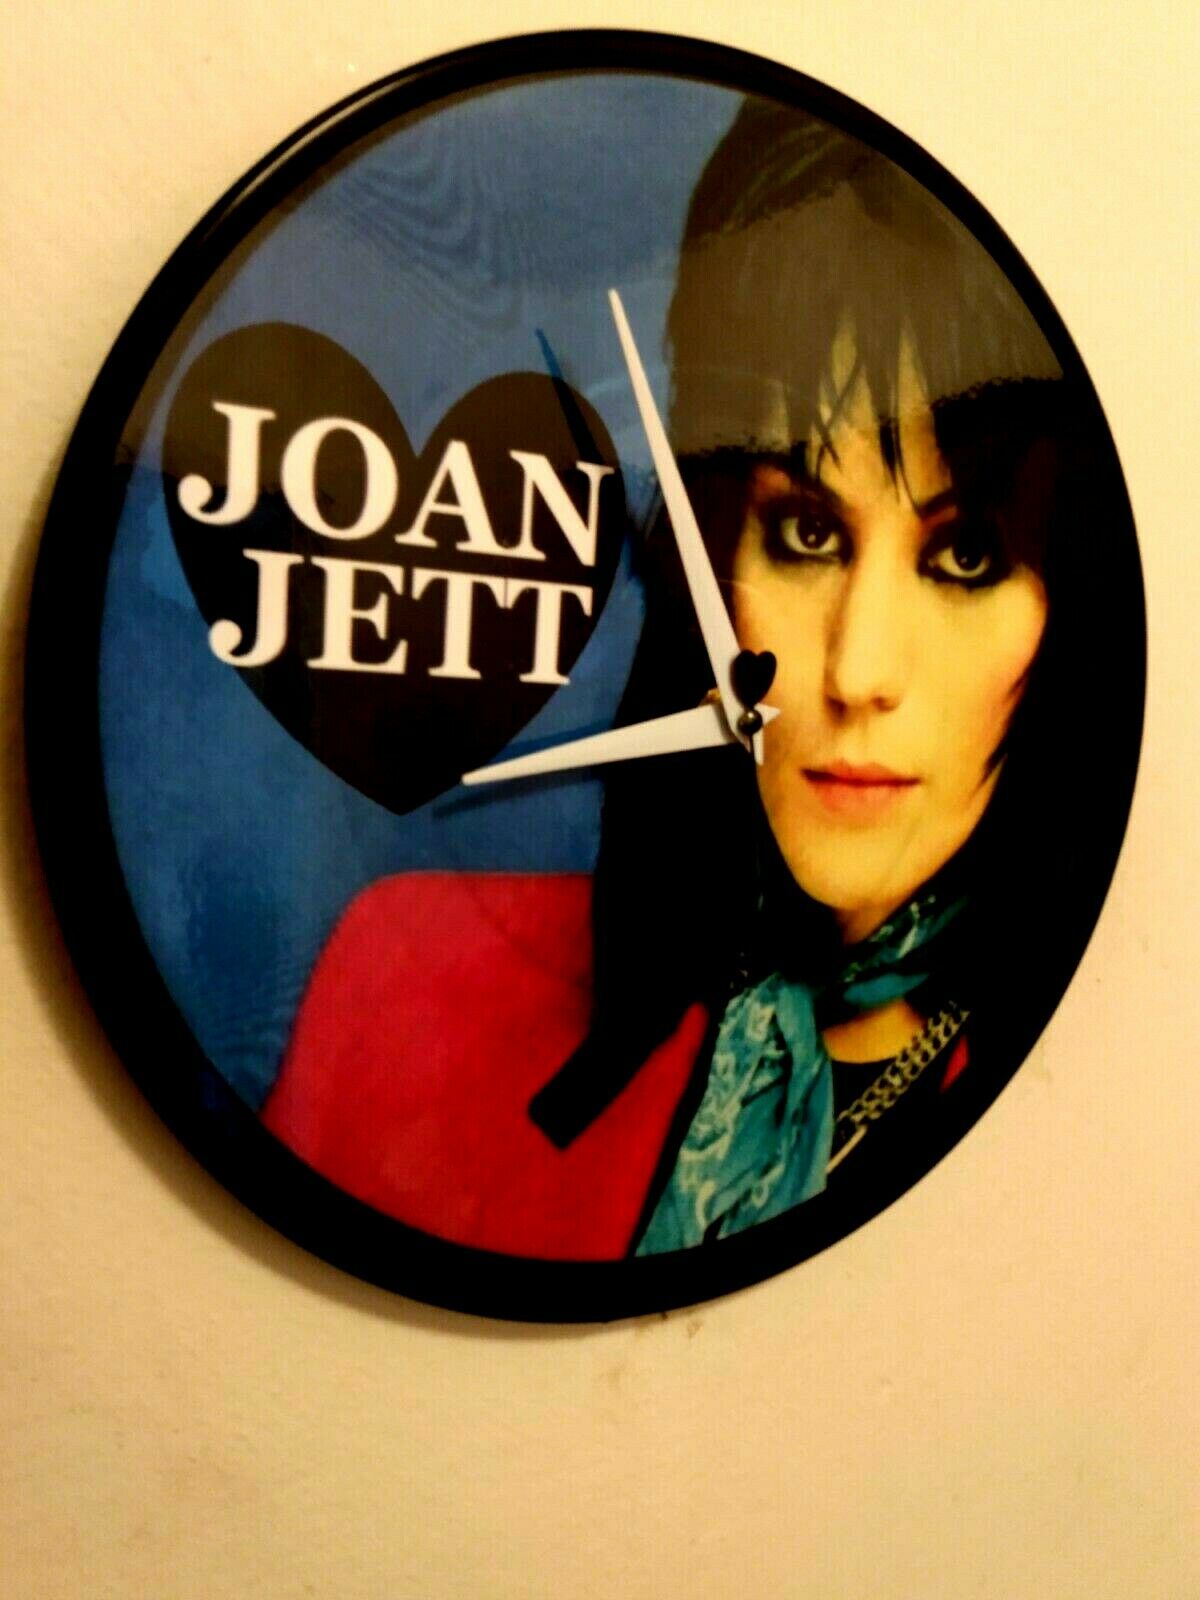 JOAN JETT & THE BLACKHEARTS- 12 INCH QUARTZ WALL CLOCK - OFFICE - FREE PRIORITY